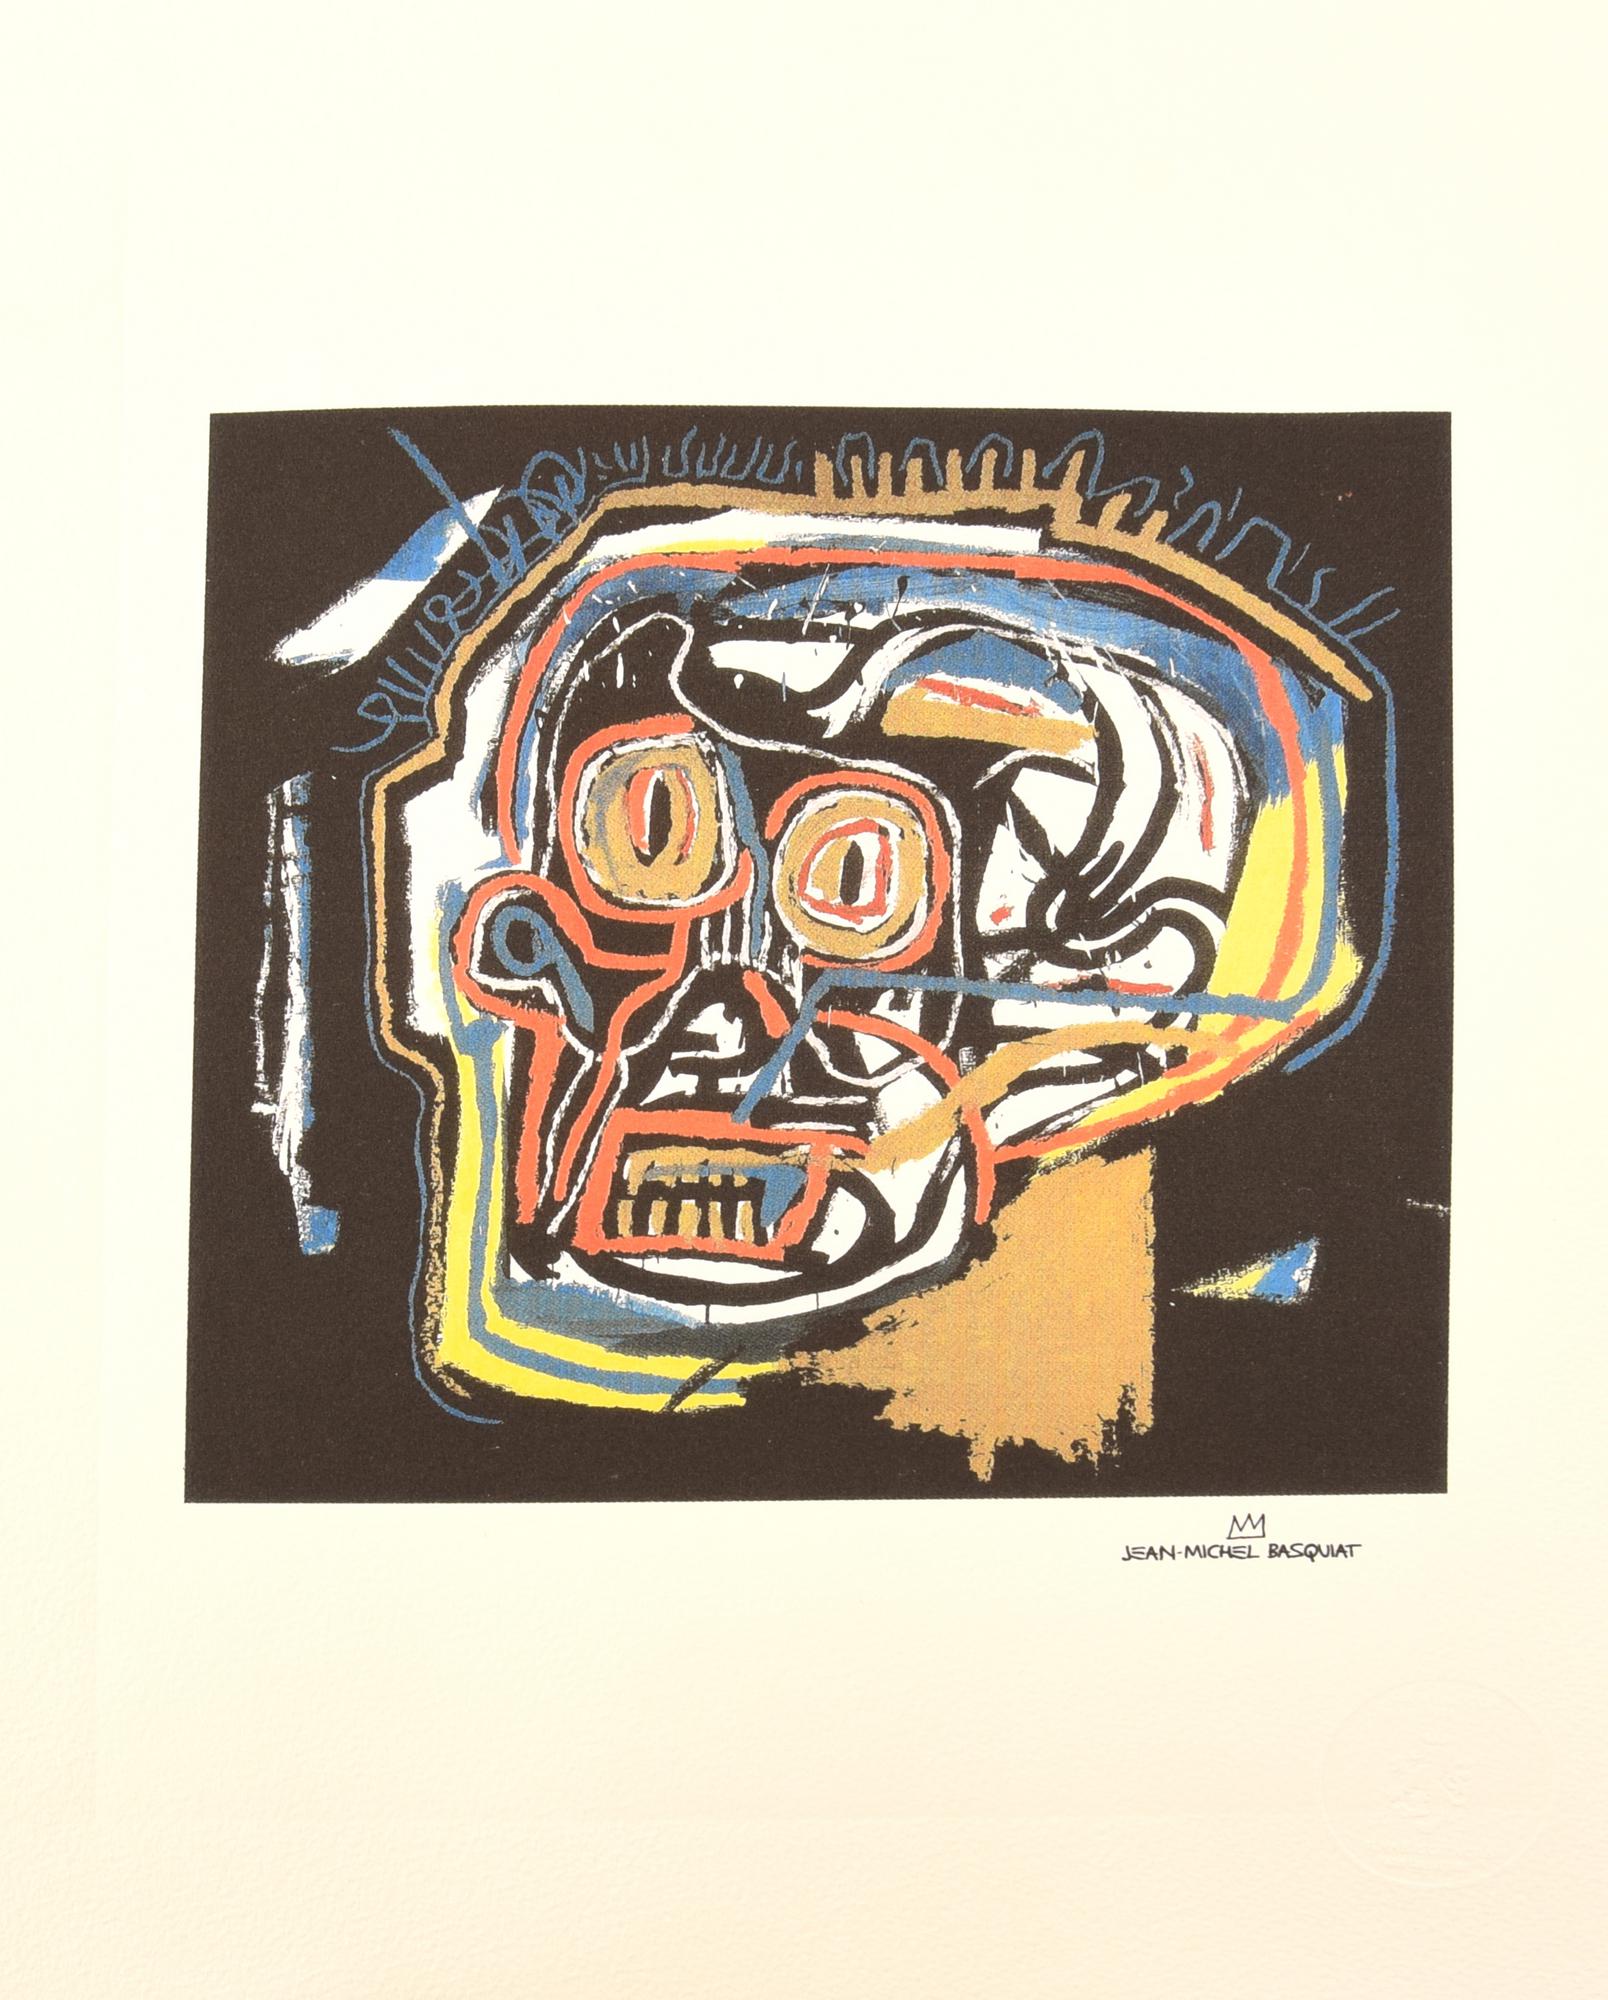 Jean Michel Basquiat UNTITLED (HEAD, FROM PORTFOLIO I) fototipo eliografico,...